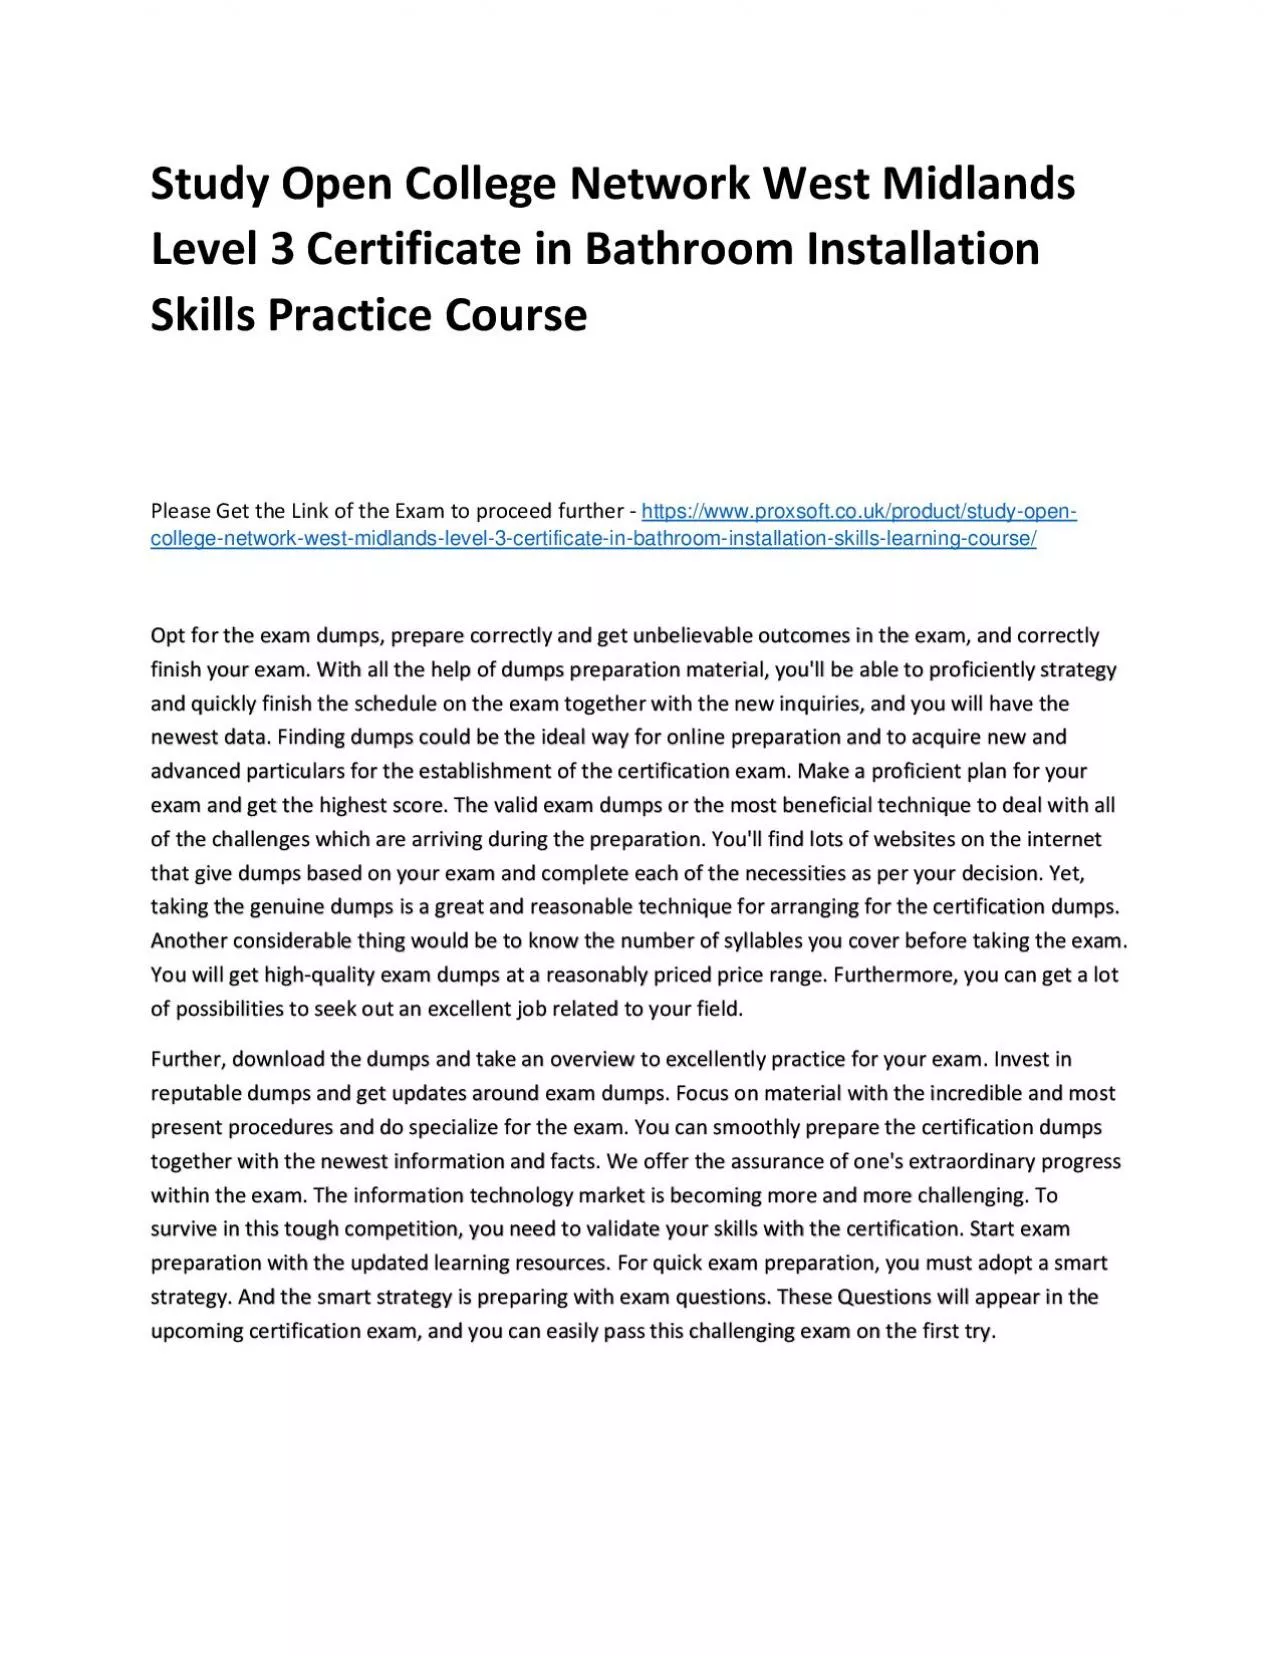 Study Open College Network West Midlands Level 3 Certificate in Bathroom Installation